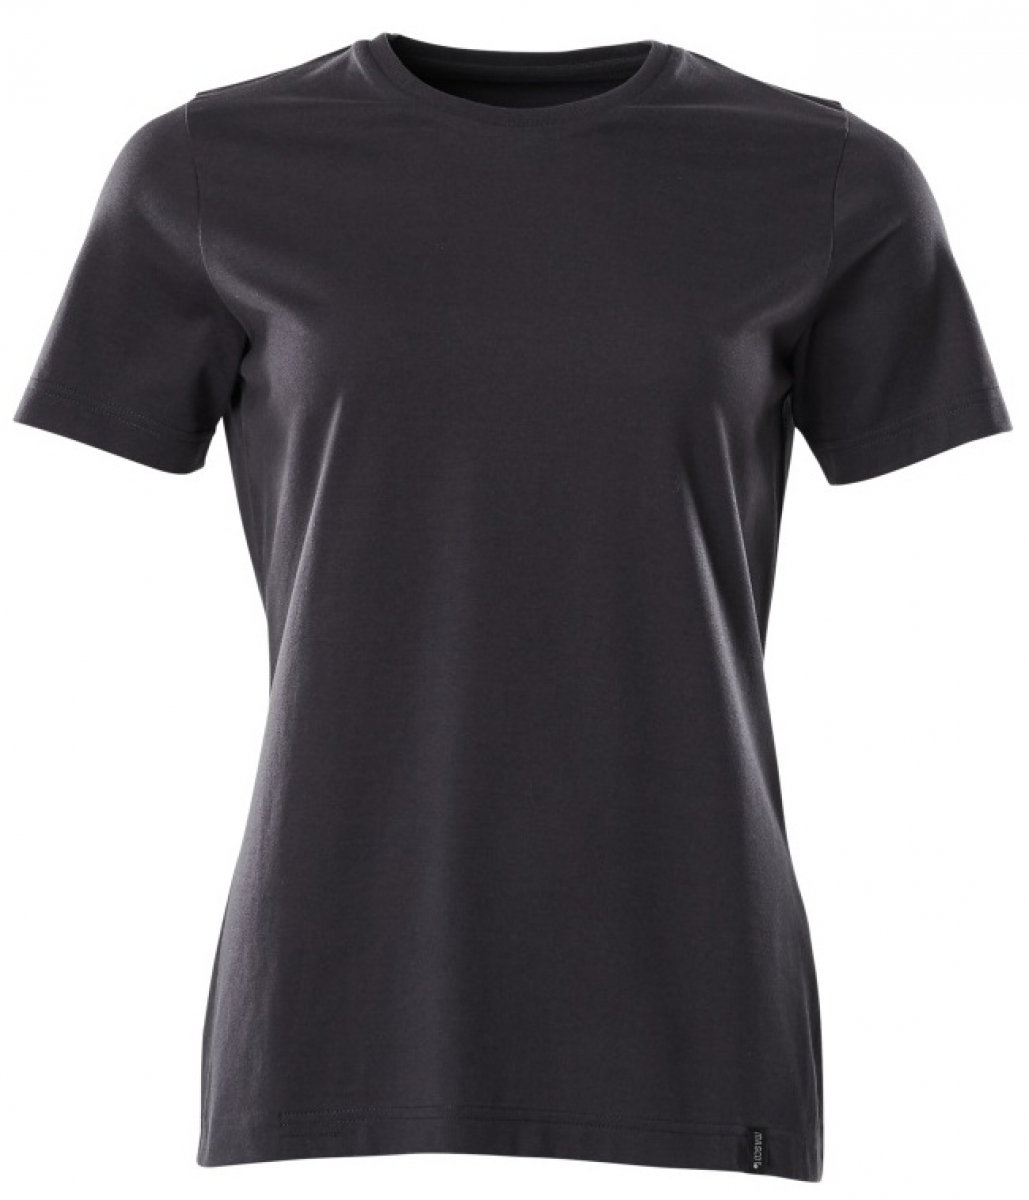 MASCOT-Worker-Shirts, Damen-T-Shirt, schwarzblau